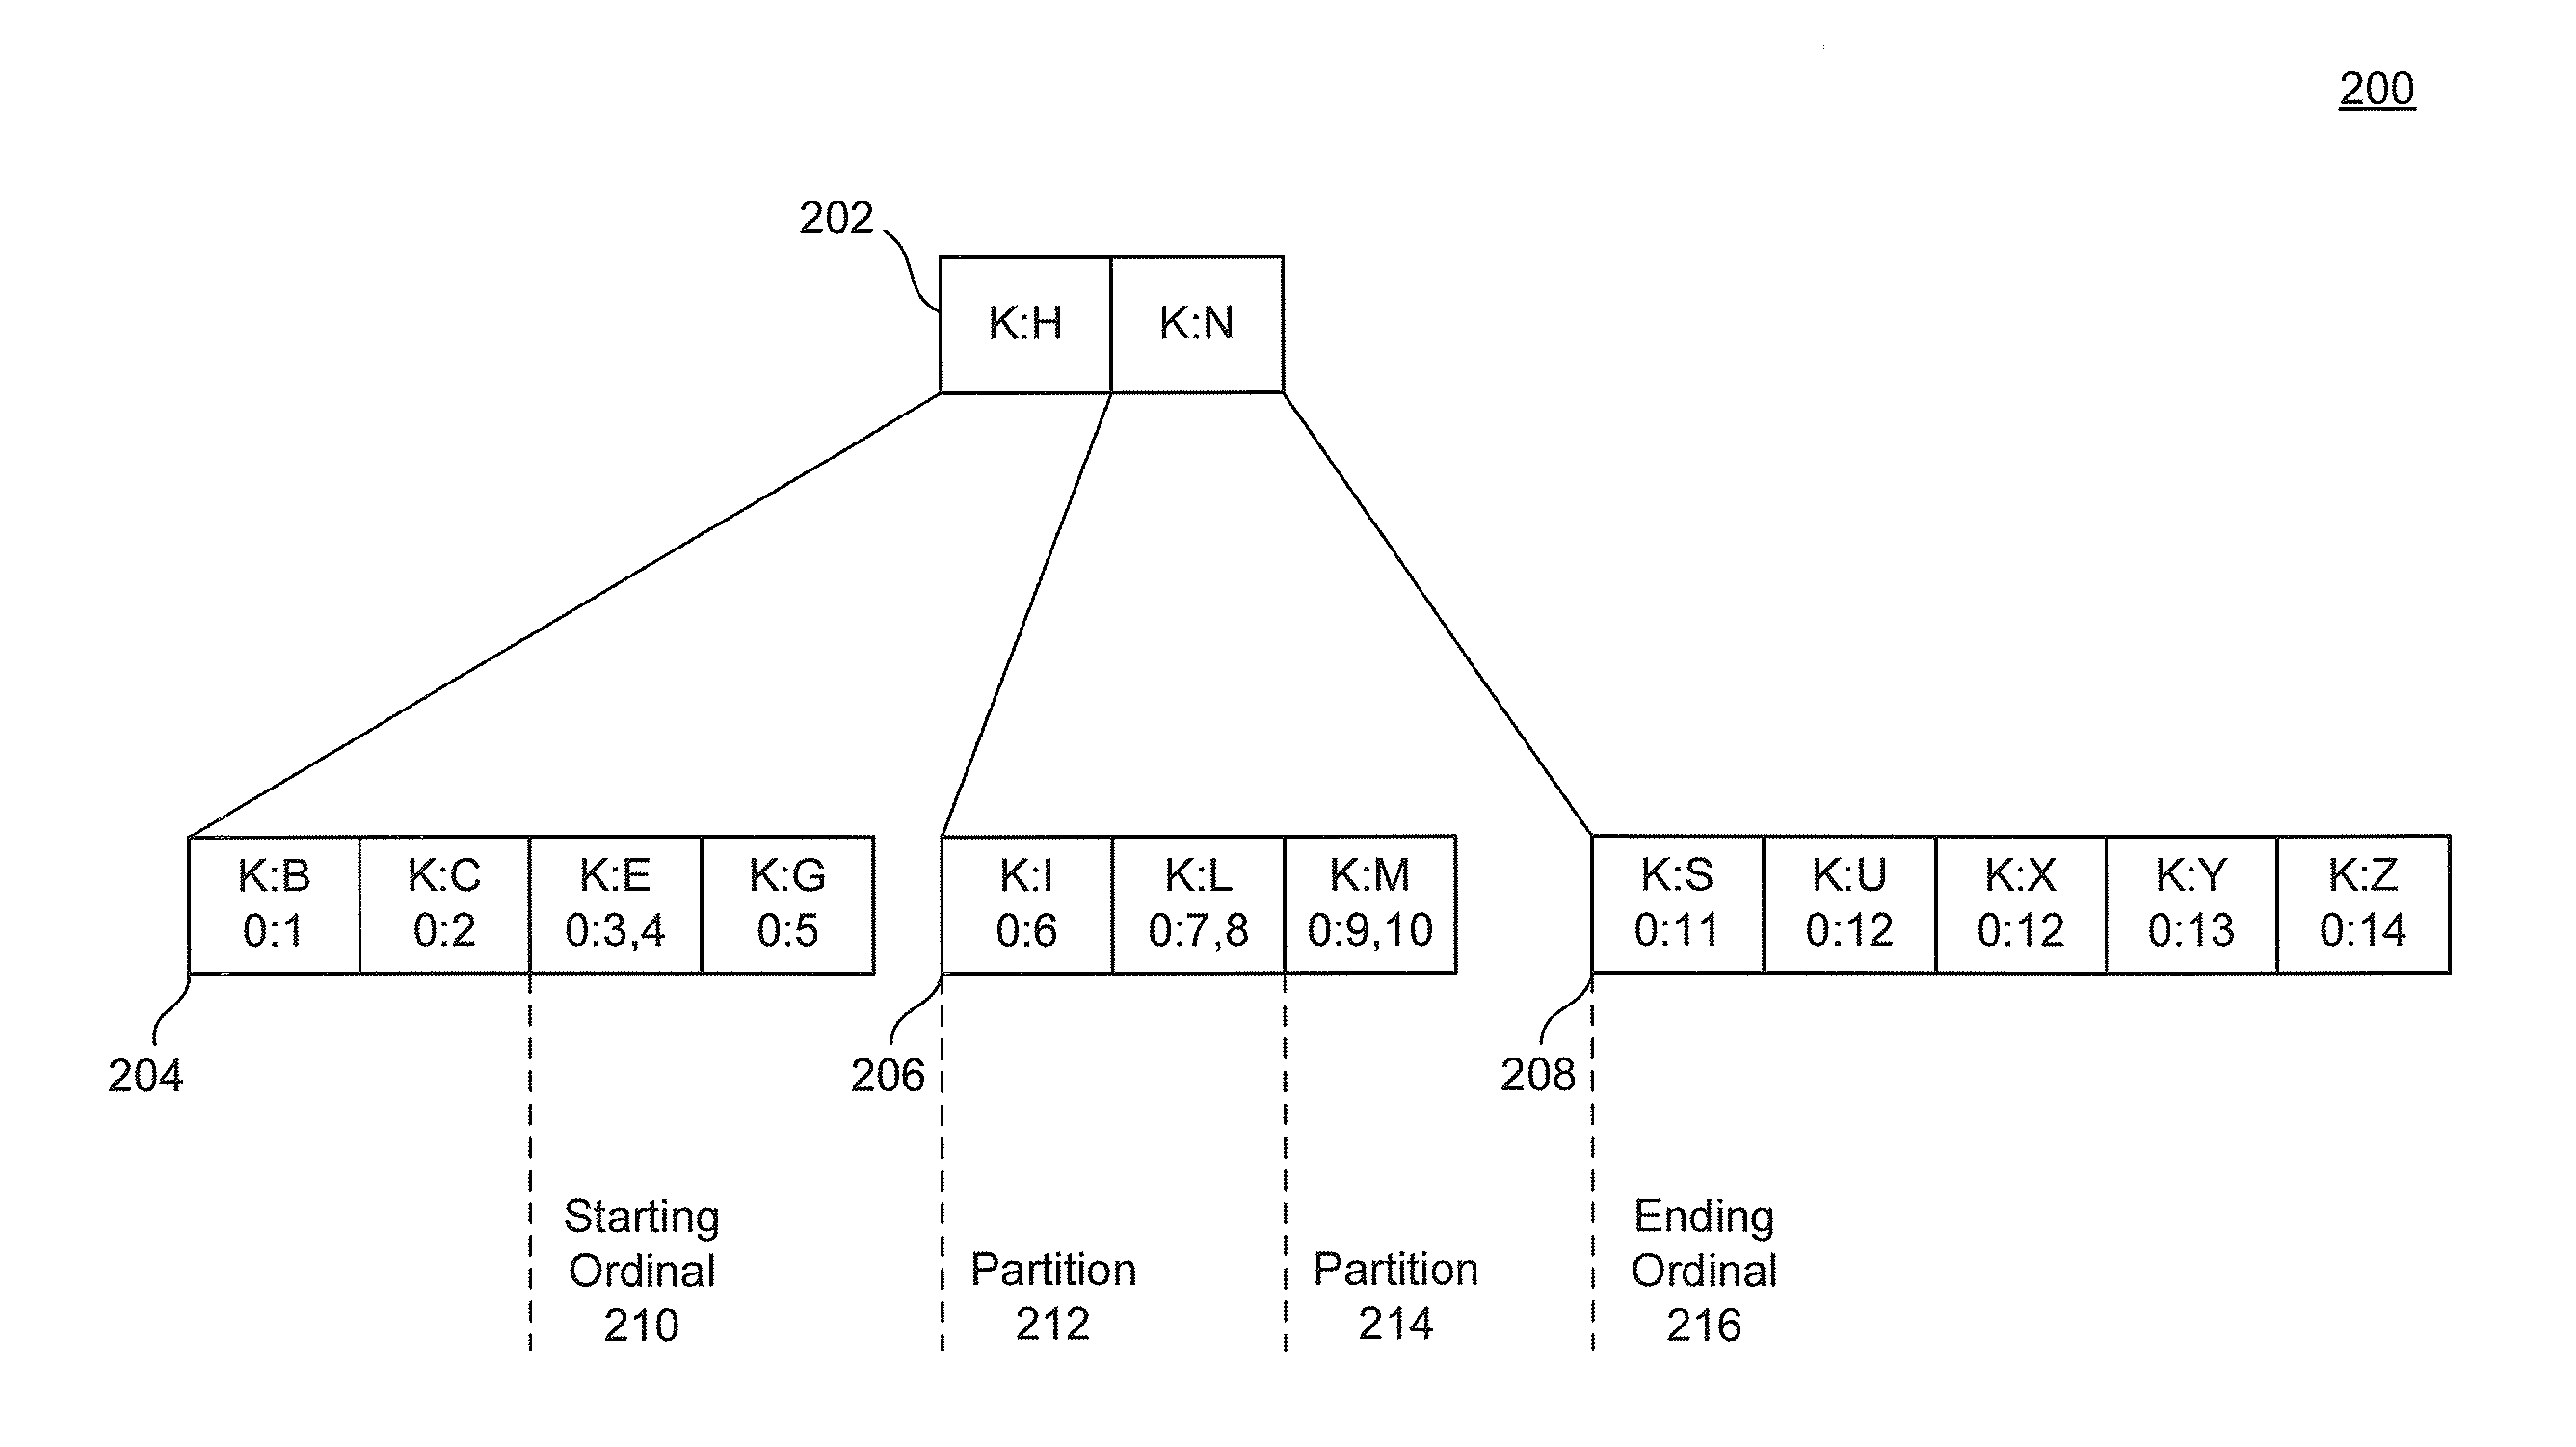 B-Tree Ordinal Approximation